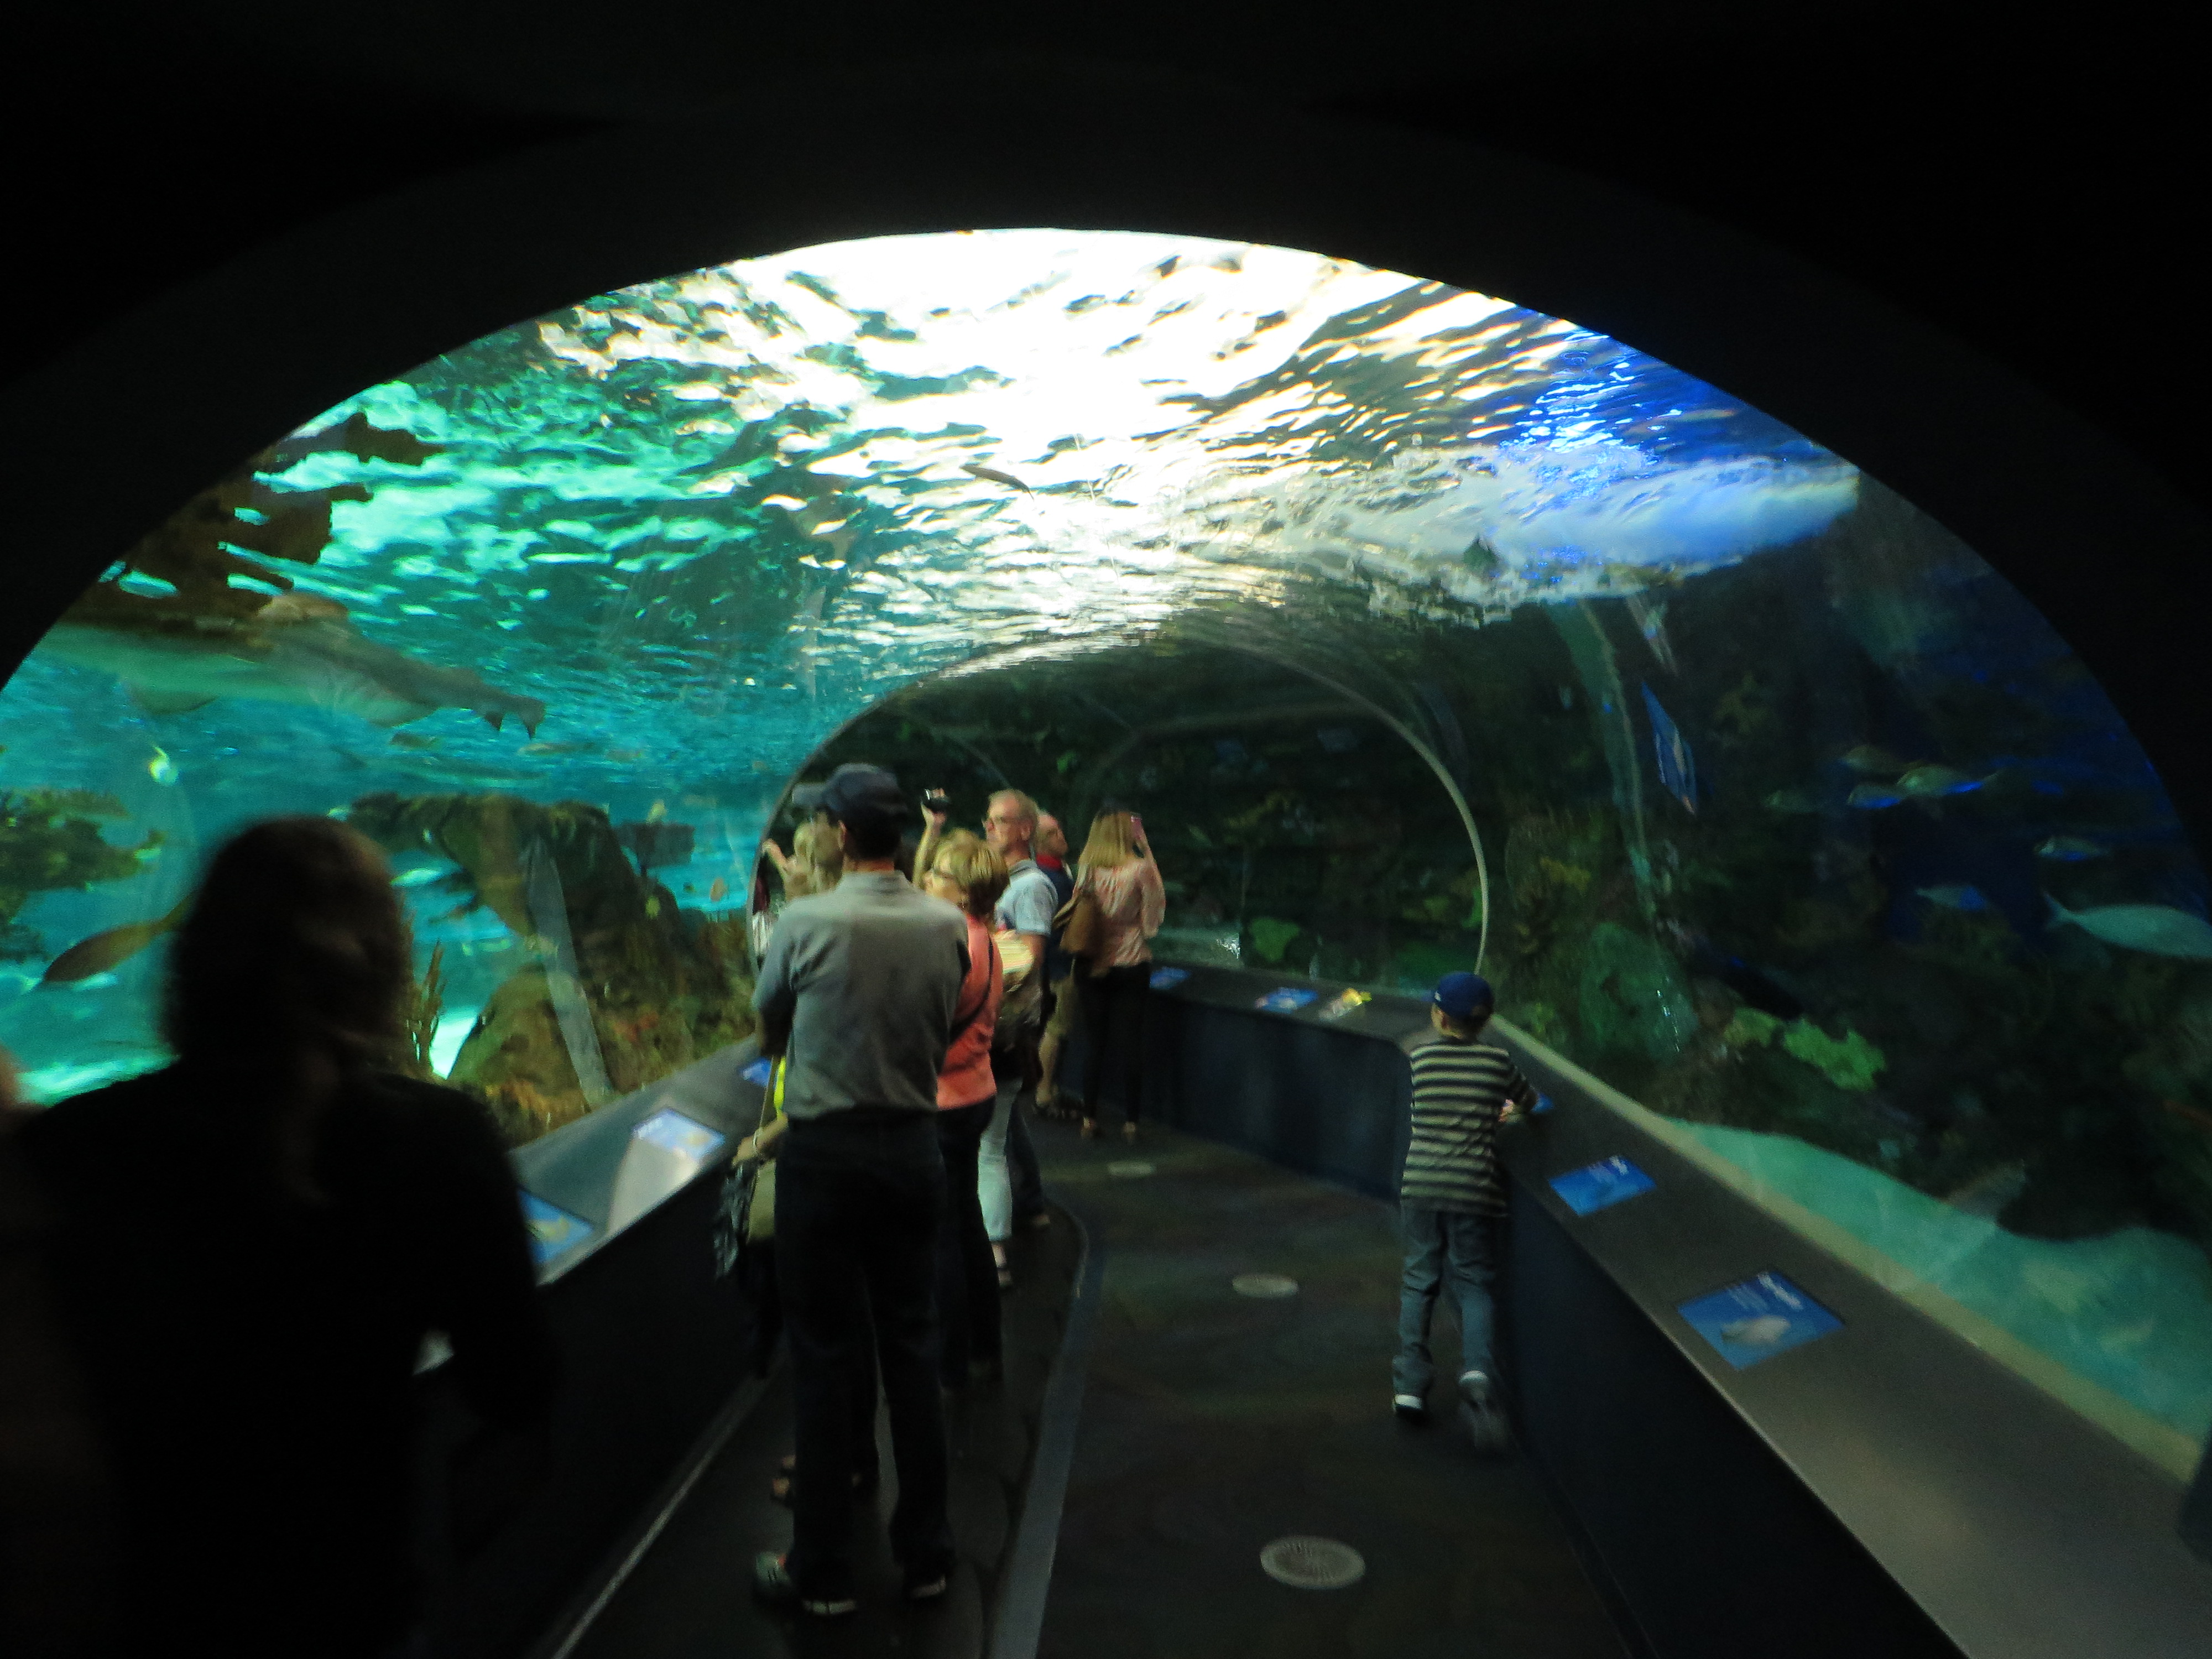 File:Ripley's Aquarium of Canada, Toronto, Ontario (30003229875).jpg -  Wikimedia Commons